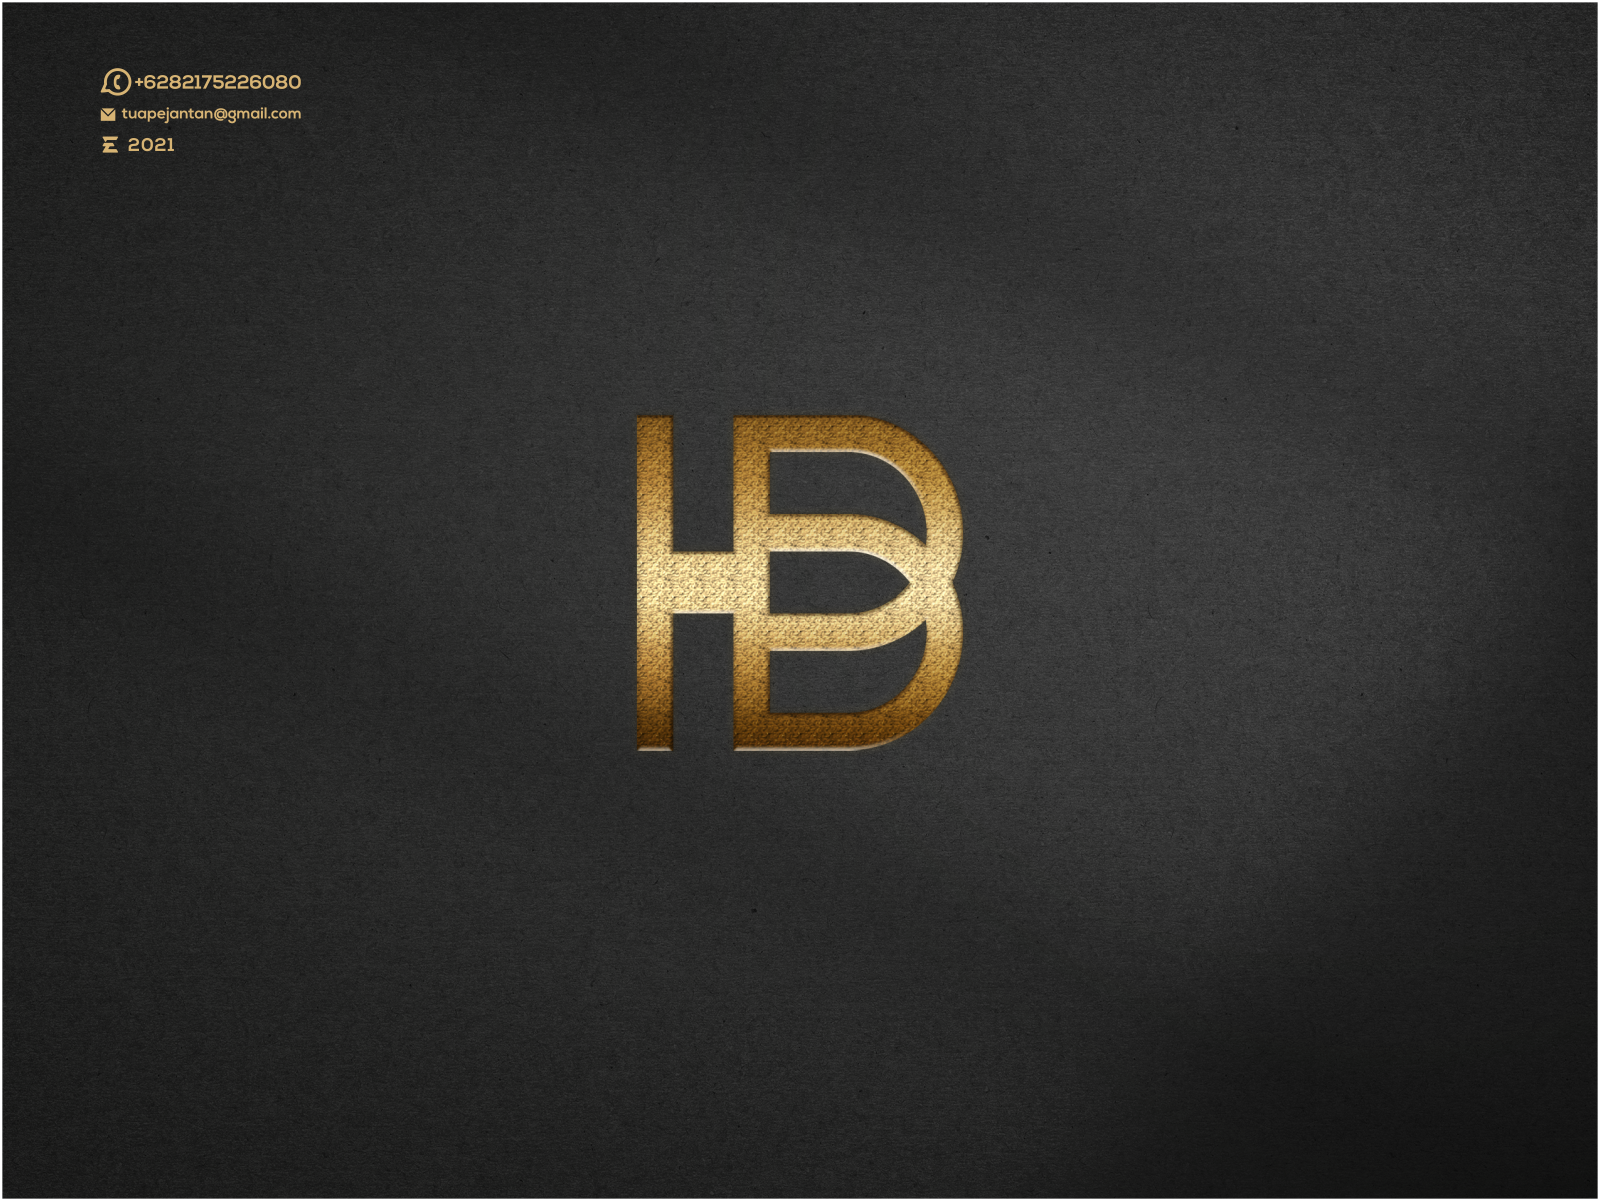 Pair of letters HB logo - MasterBundles